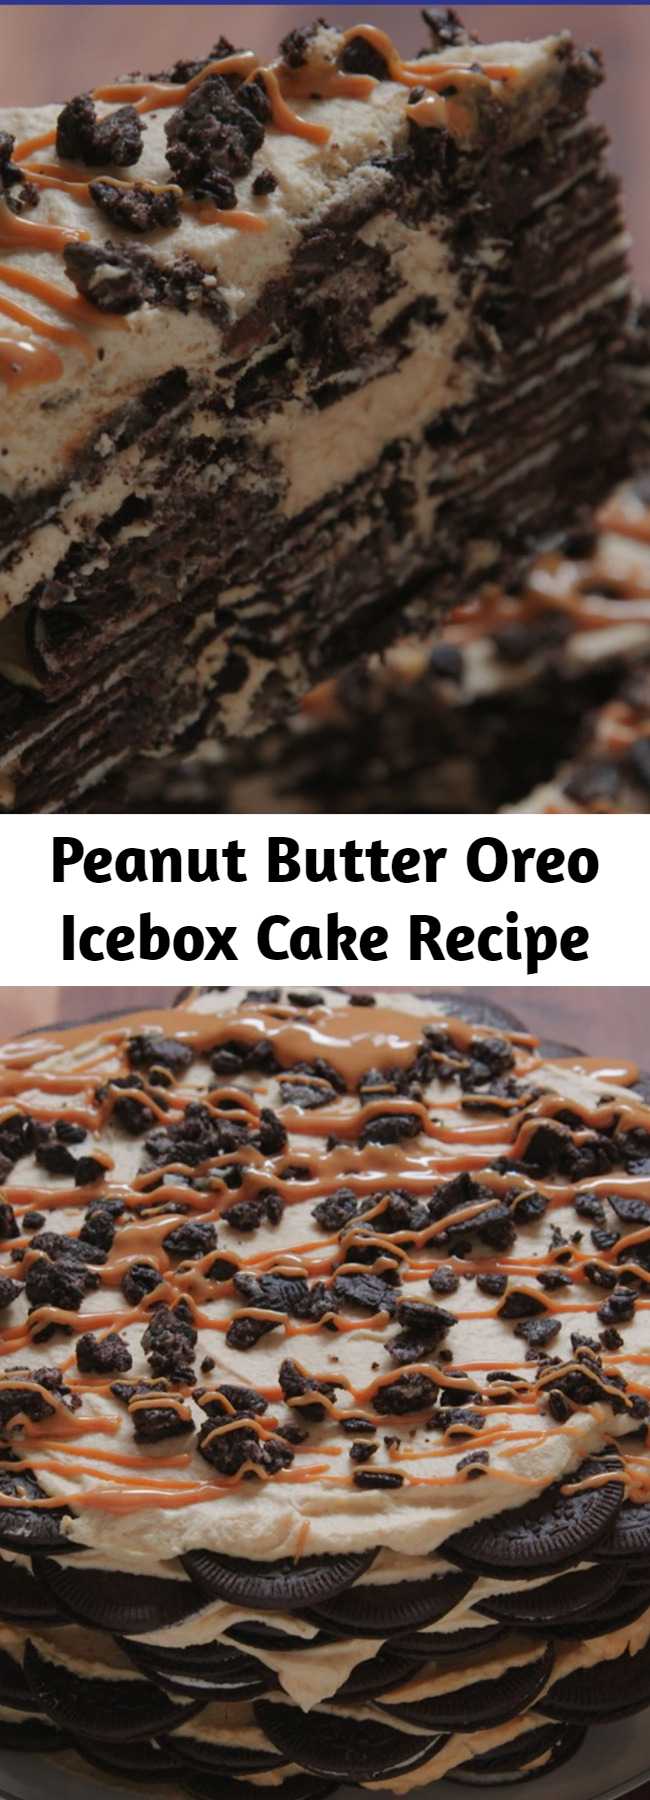 Peanut Butter Oreo Icebox Cake Recipe - Love icebox cake? This peanut butter Oreo icebox cake is the best.